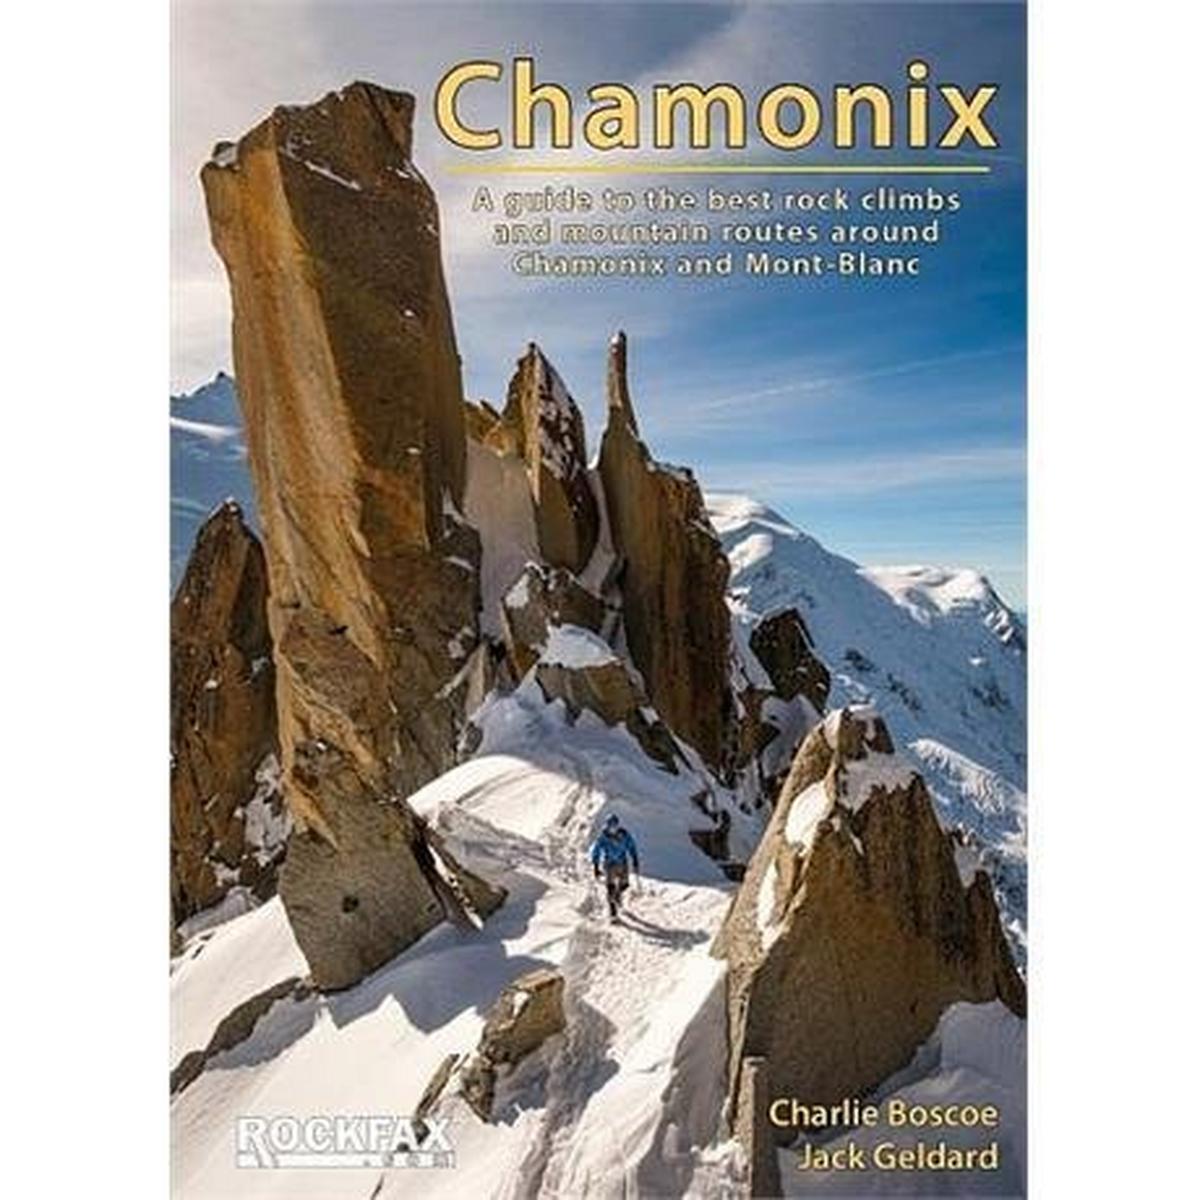 Rockfax Climbing Guide Book: Chamonix